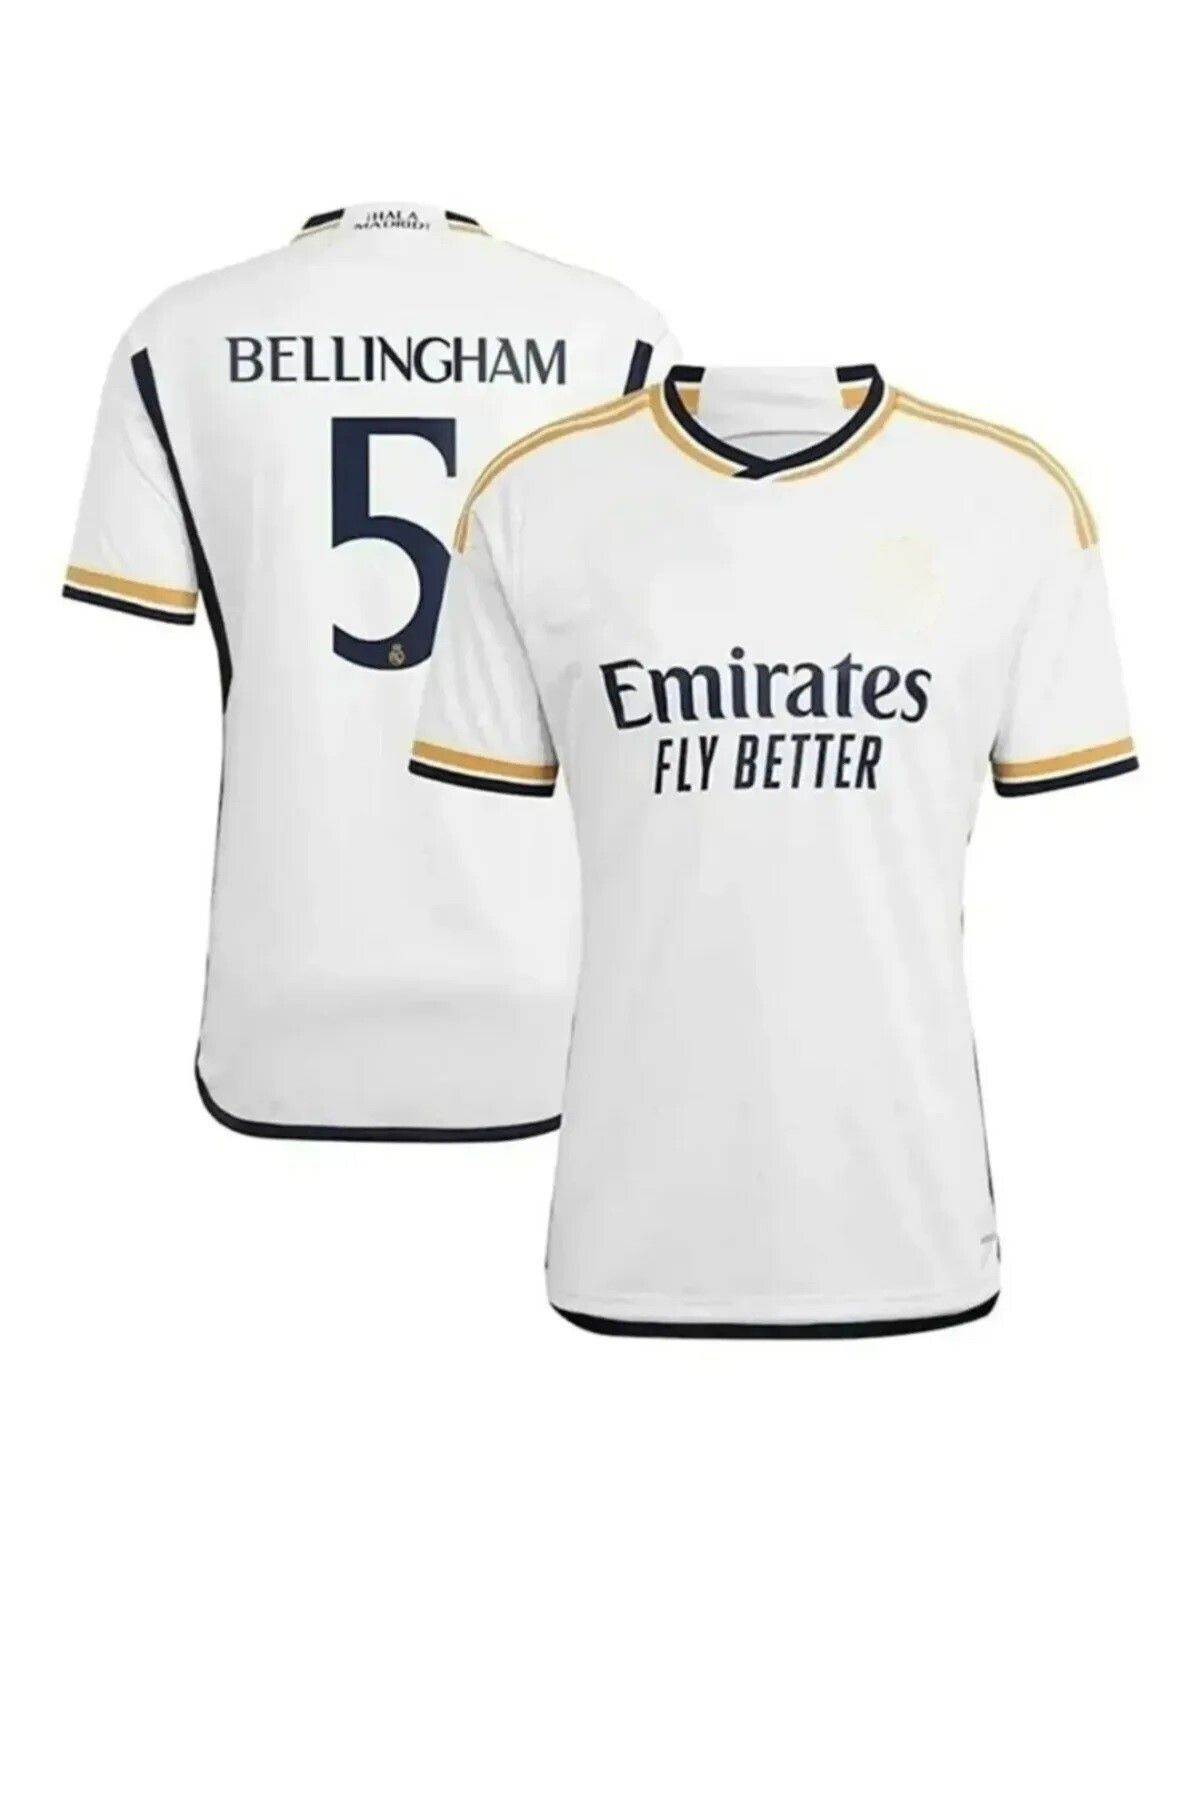 FORMA16 Real Madrid Bellingham Forması